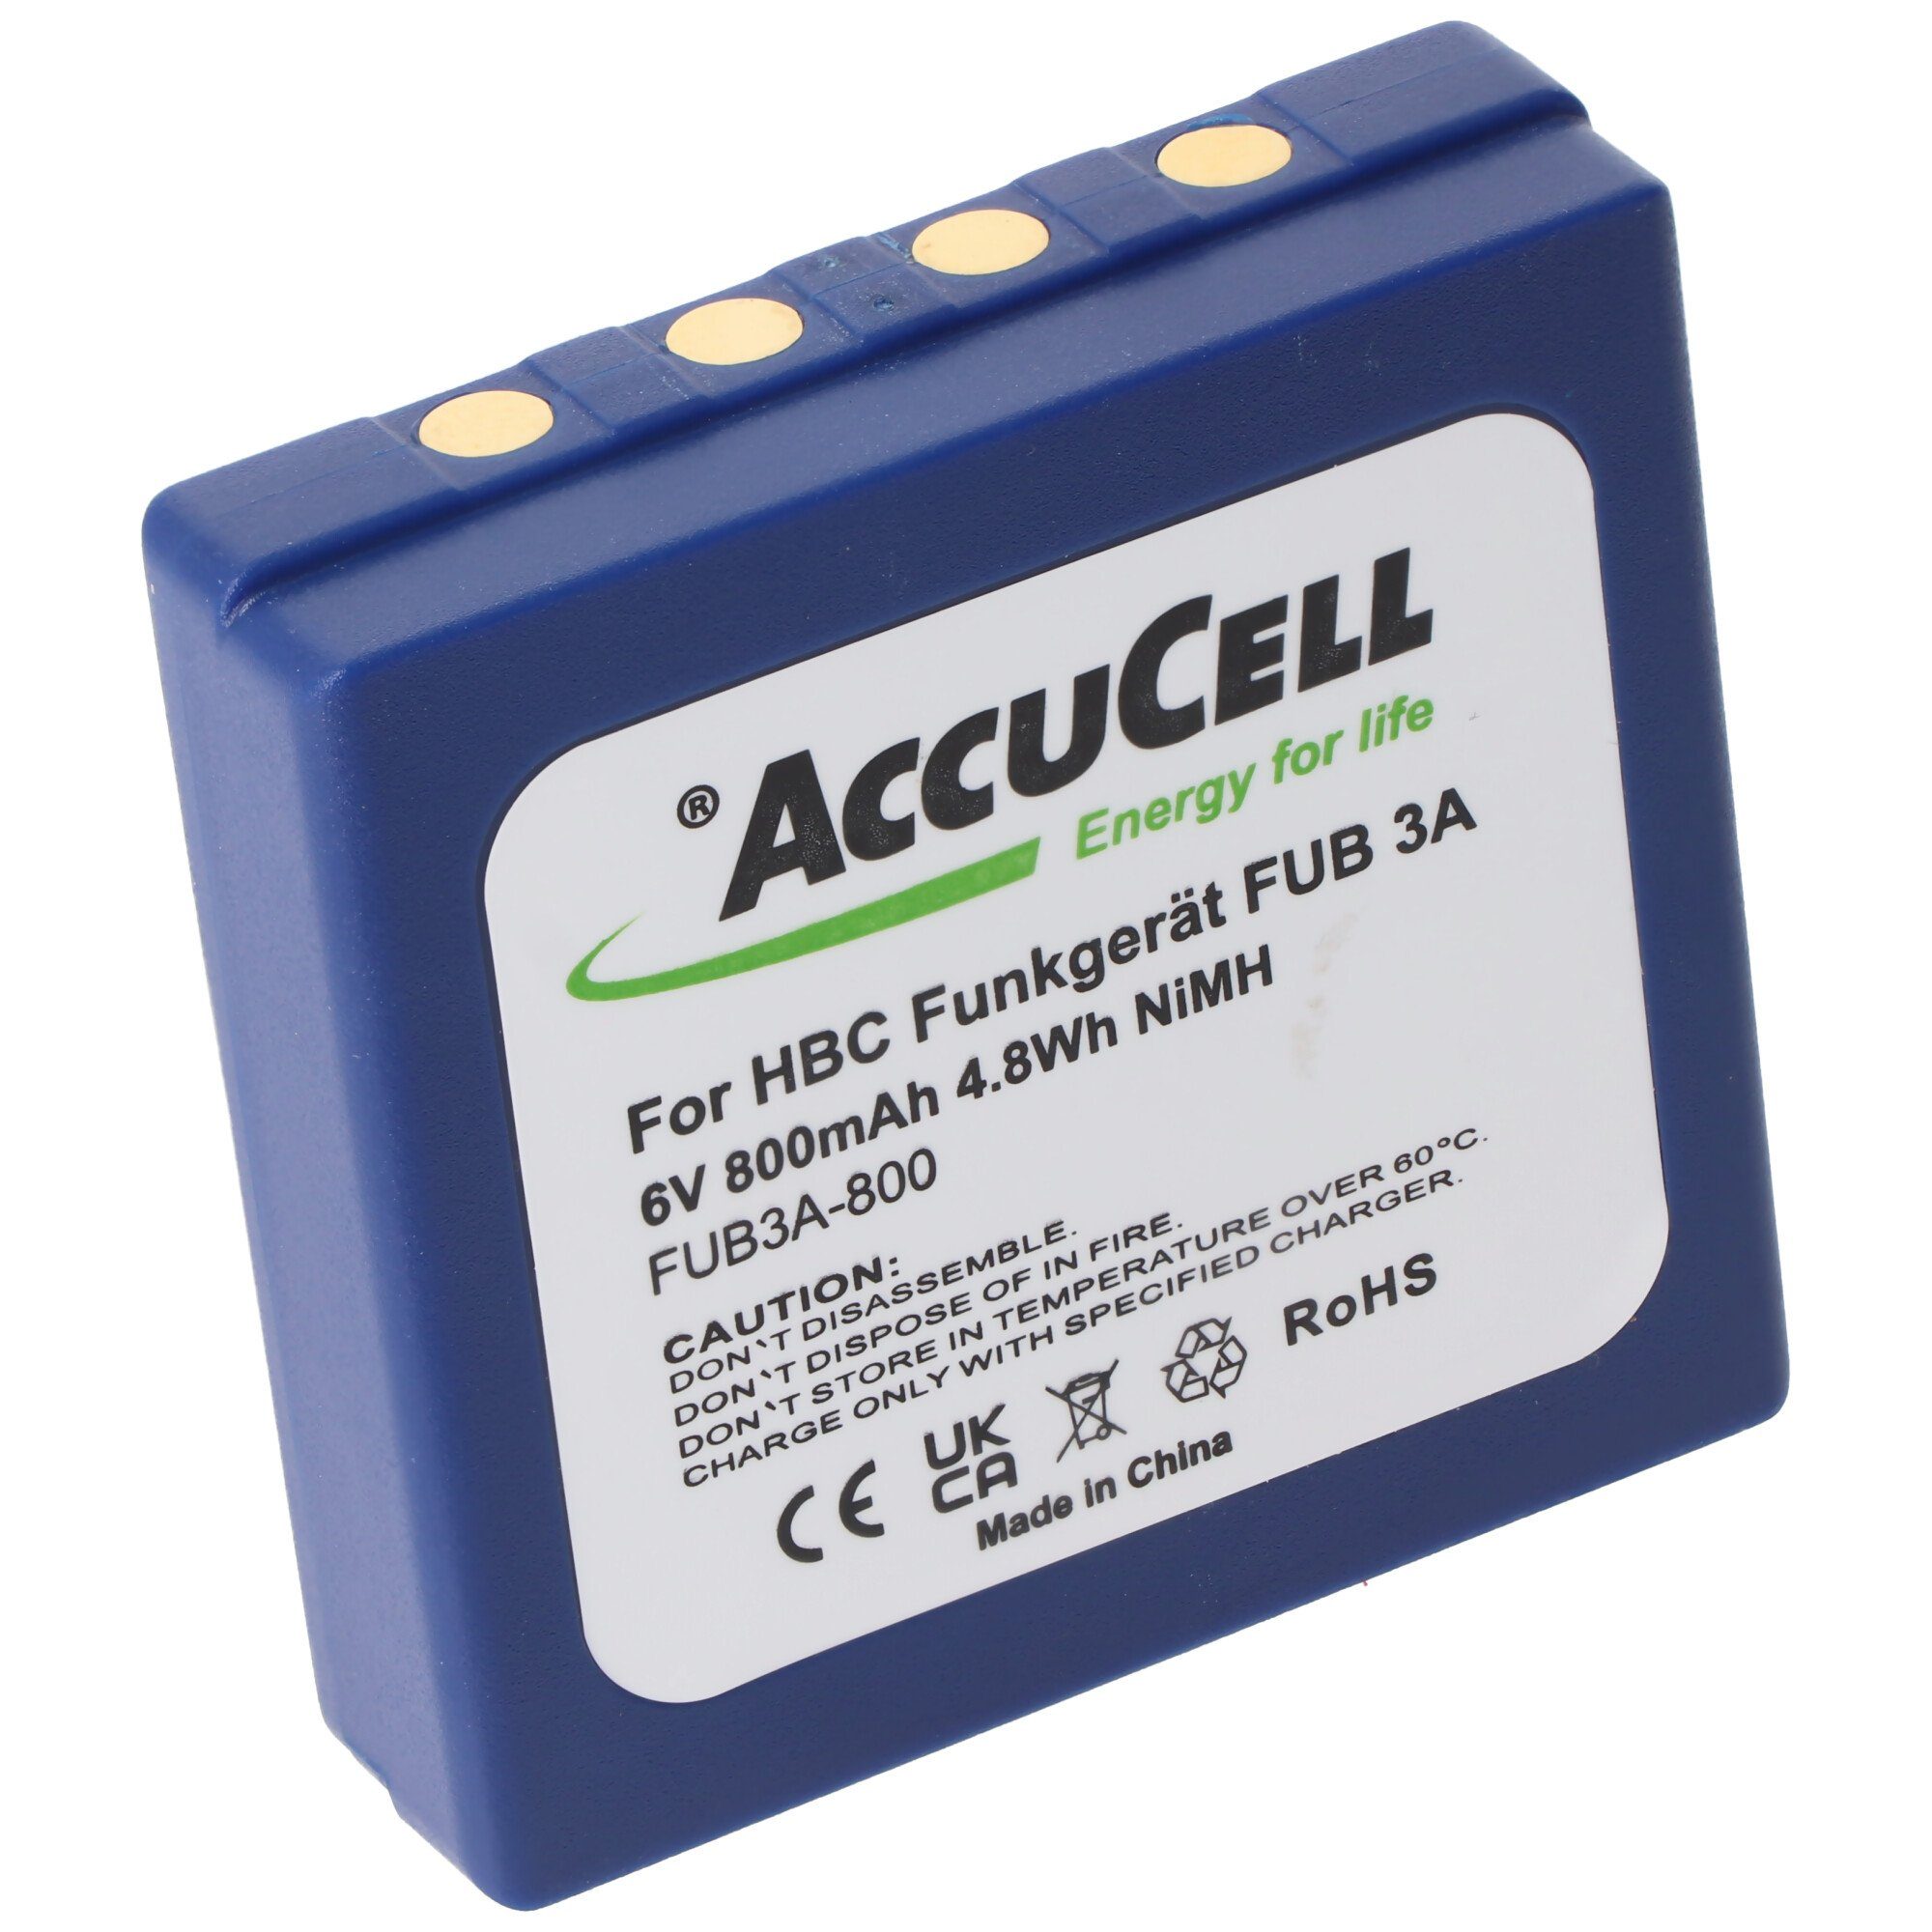 AccuCell 800mAh Akku passend für HBC Funkgerät FUB 3A Akku BA203060, BA222060, Akku 800 mAh (6,0 V) | Akkus und PowerBanks